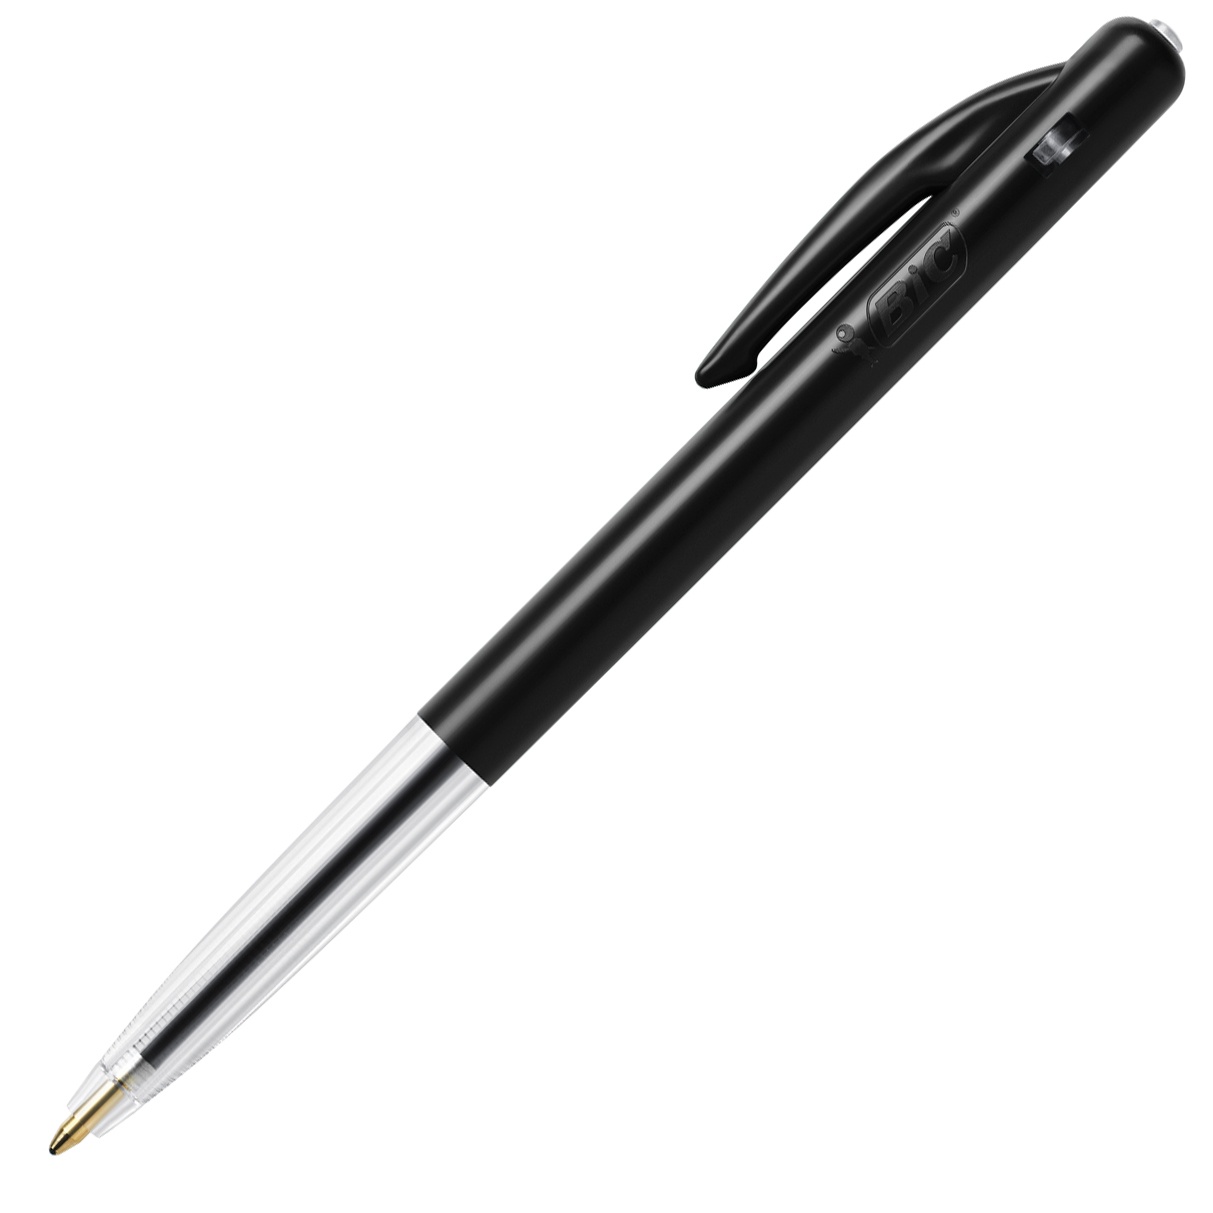 M10 Original Ballpoint Pen in the group Pens / Office / Office Pens at Pen Store (100215_r)